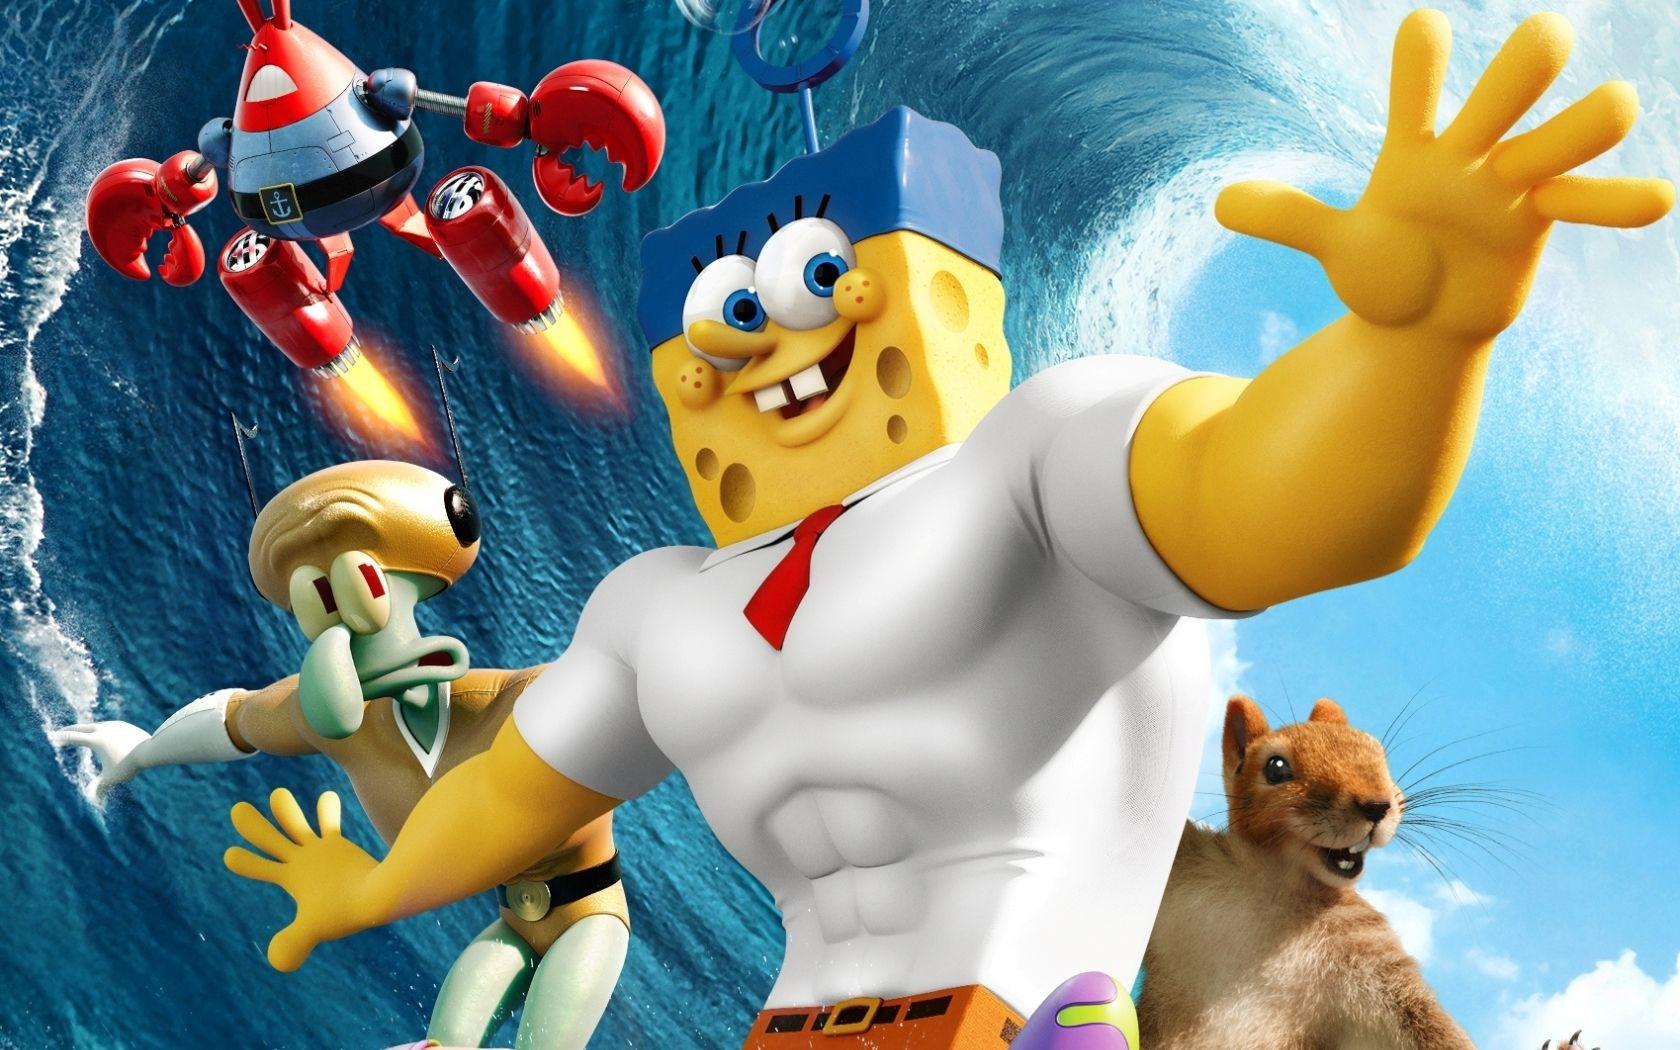 80 Spongebob Squarepants HD Wallpapers and Backgrounds